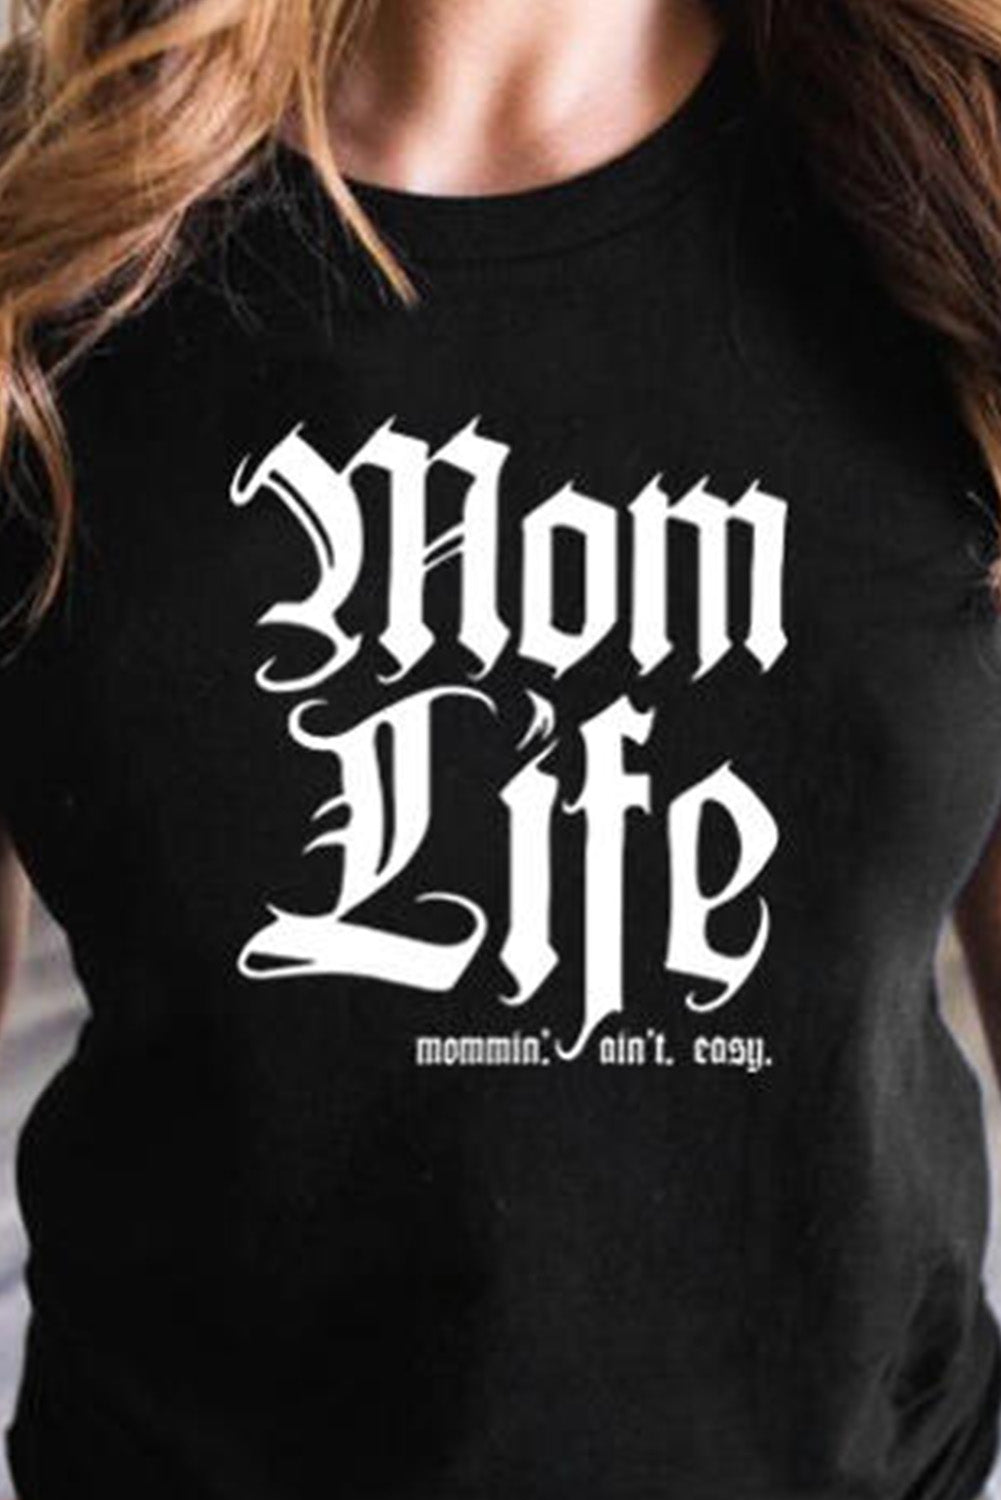 Black Women Funny Graphic T Shirt Mom Life Shirt Casual Tops LC2523525-2